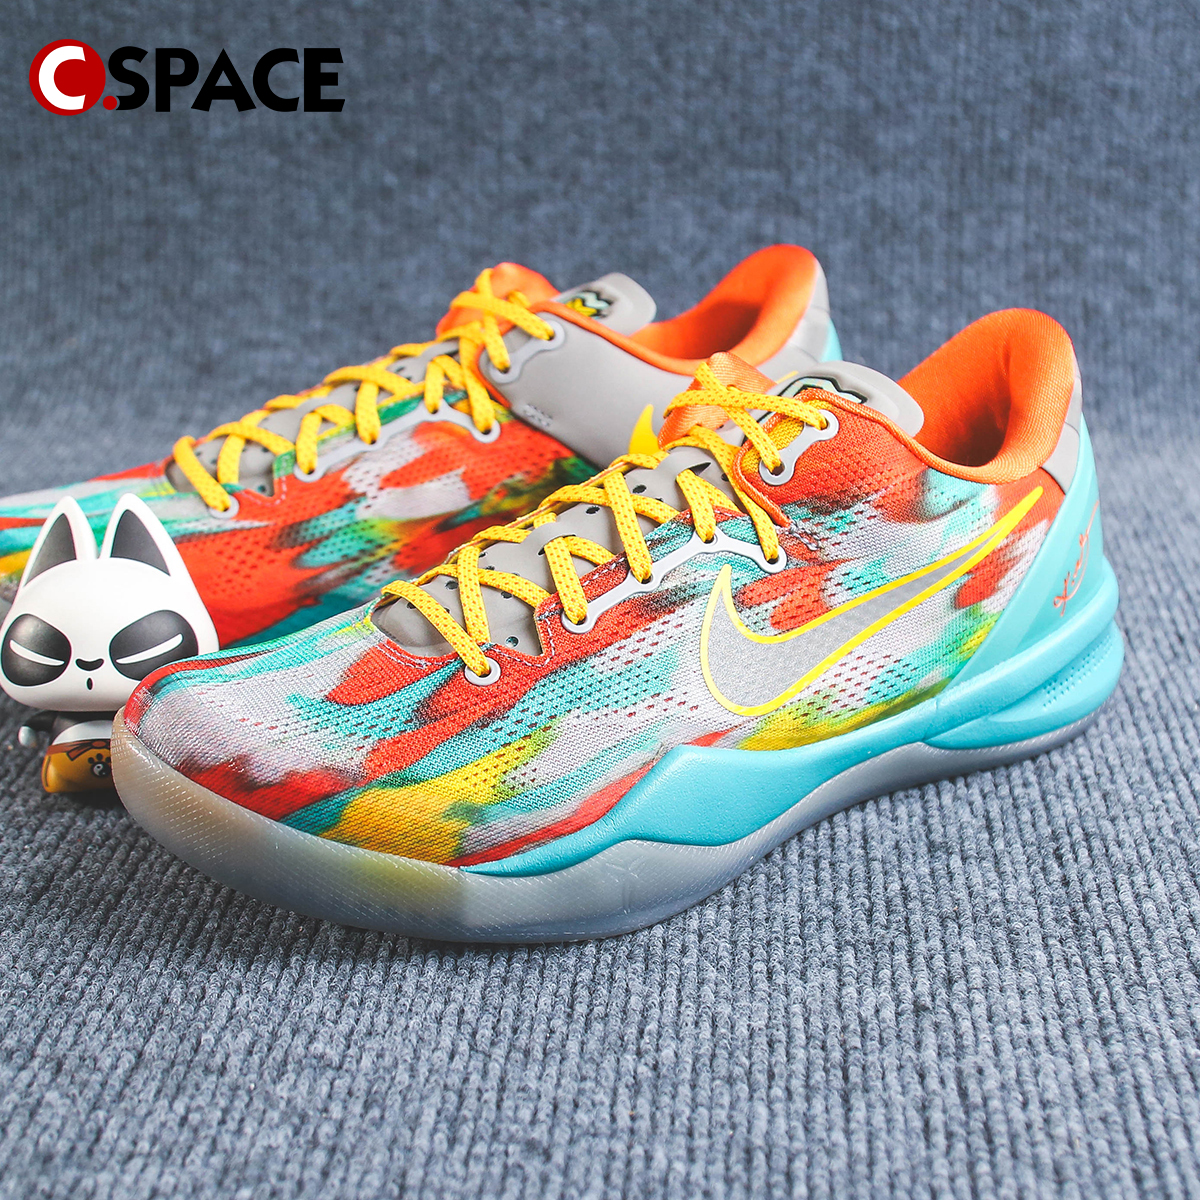 NIKE 耐克 Cspace DP Nike Kobe 8 ZK8 科比8代 蓝红实战篮球鞋 FQ3548-001 1529元